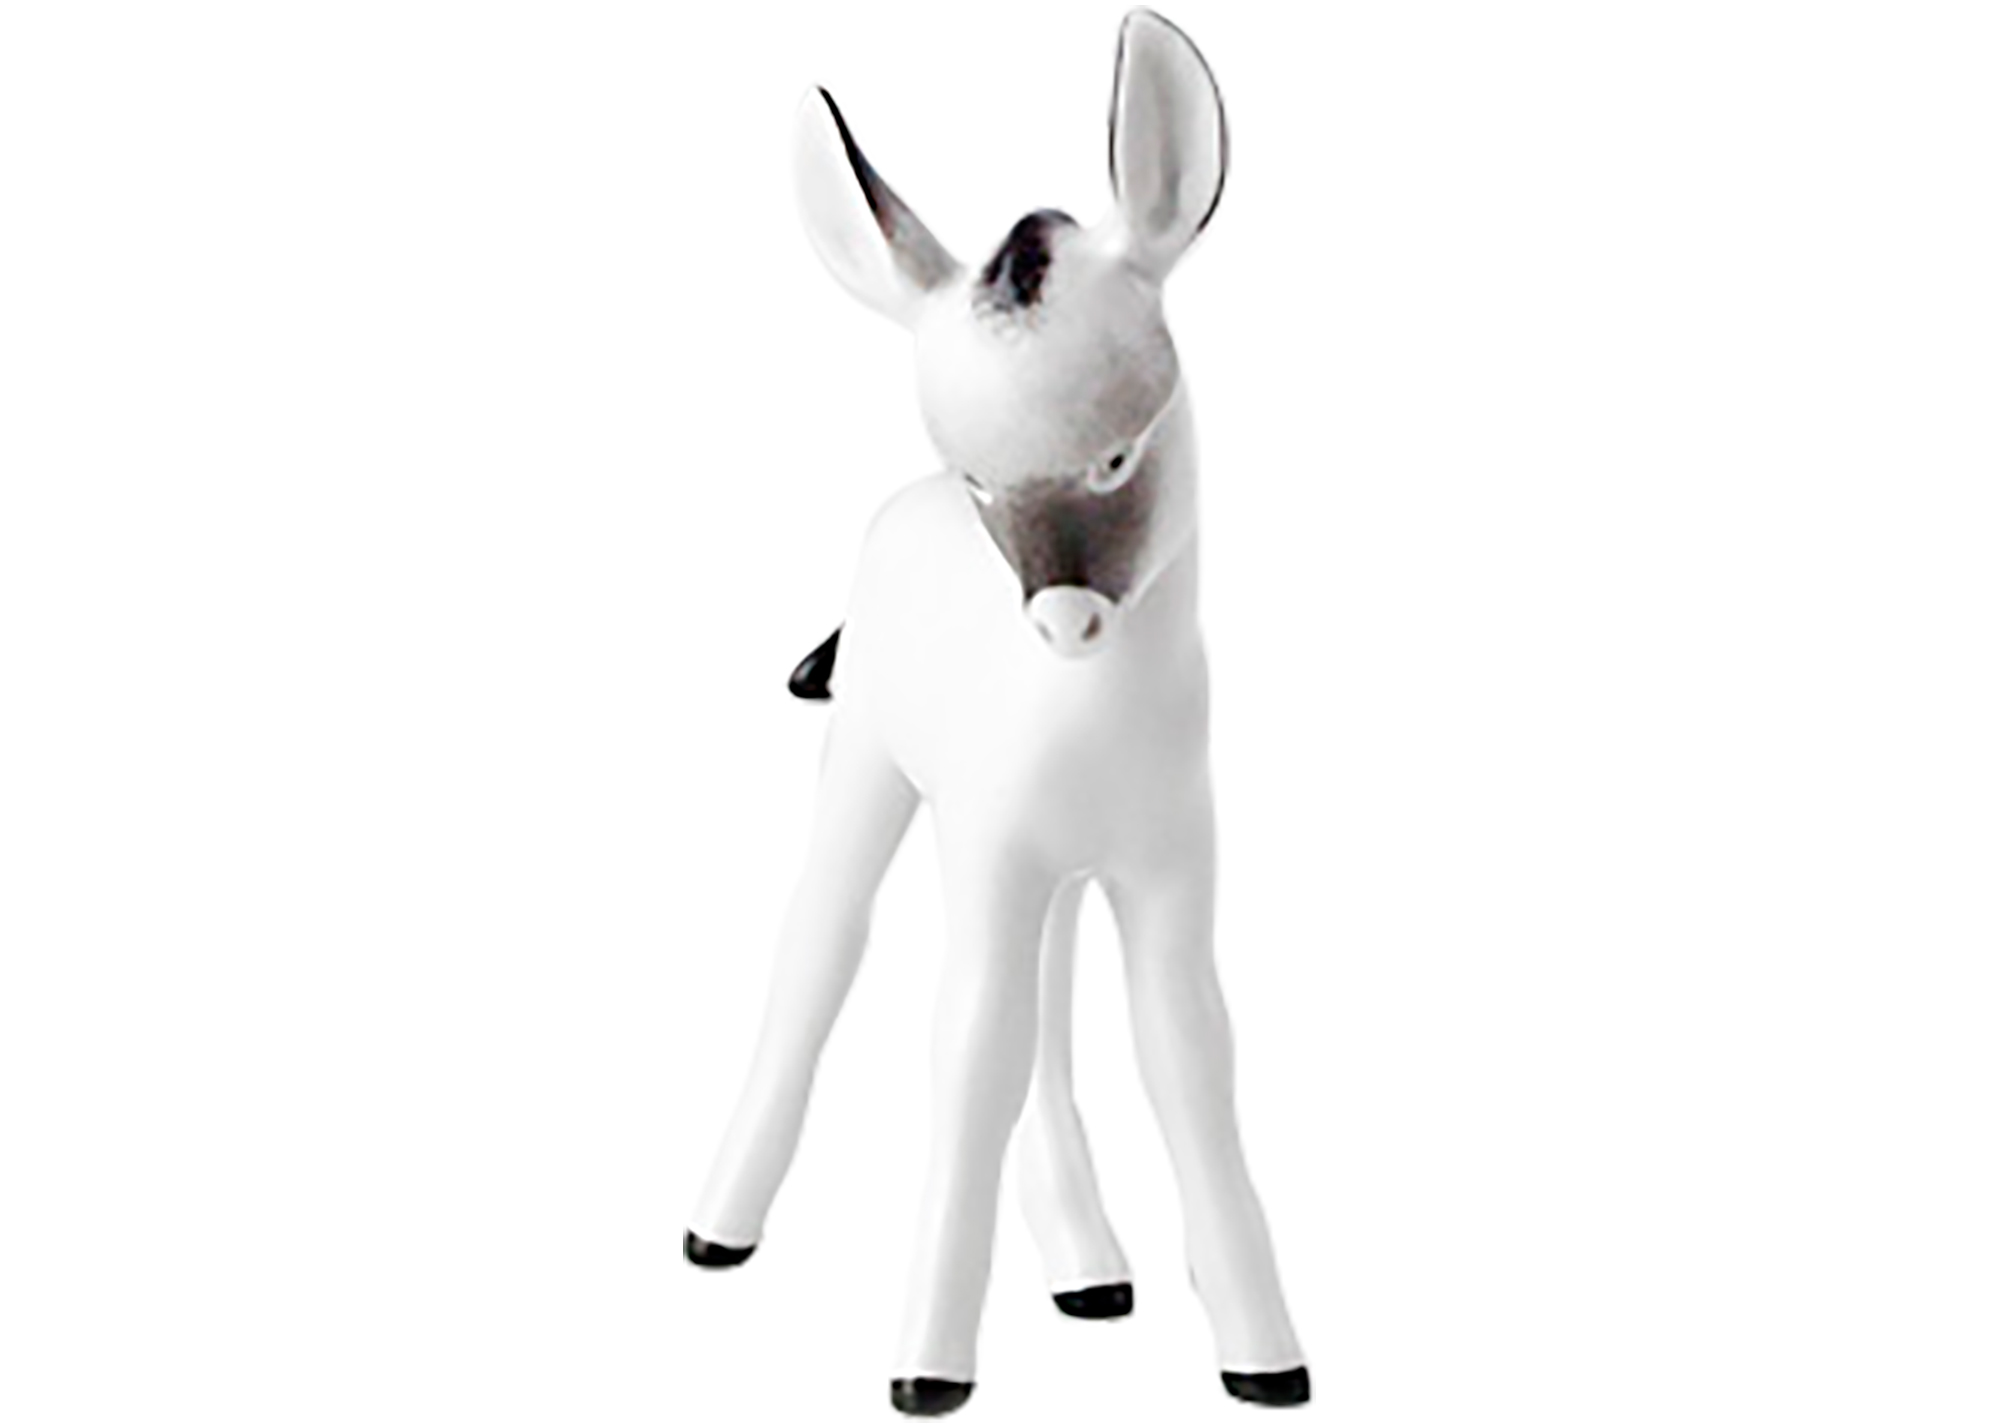 Buy Standing Donkey Figurine at GoldenCockerel.com